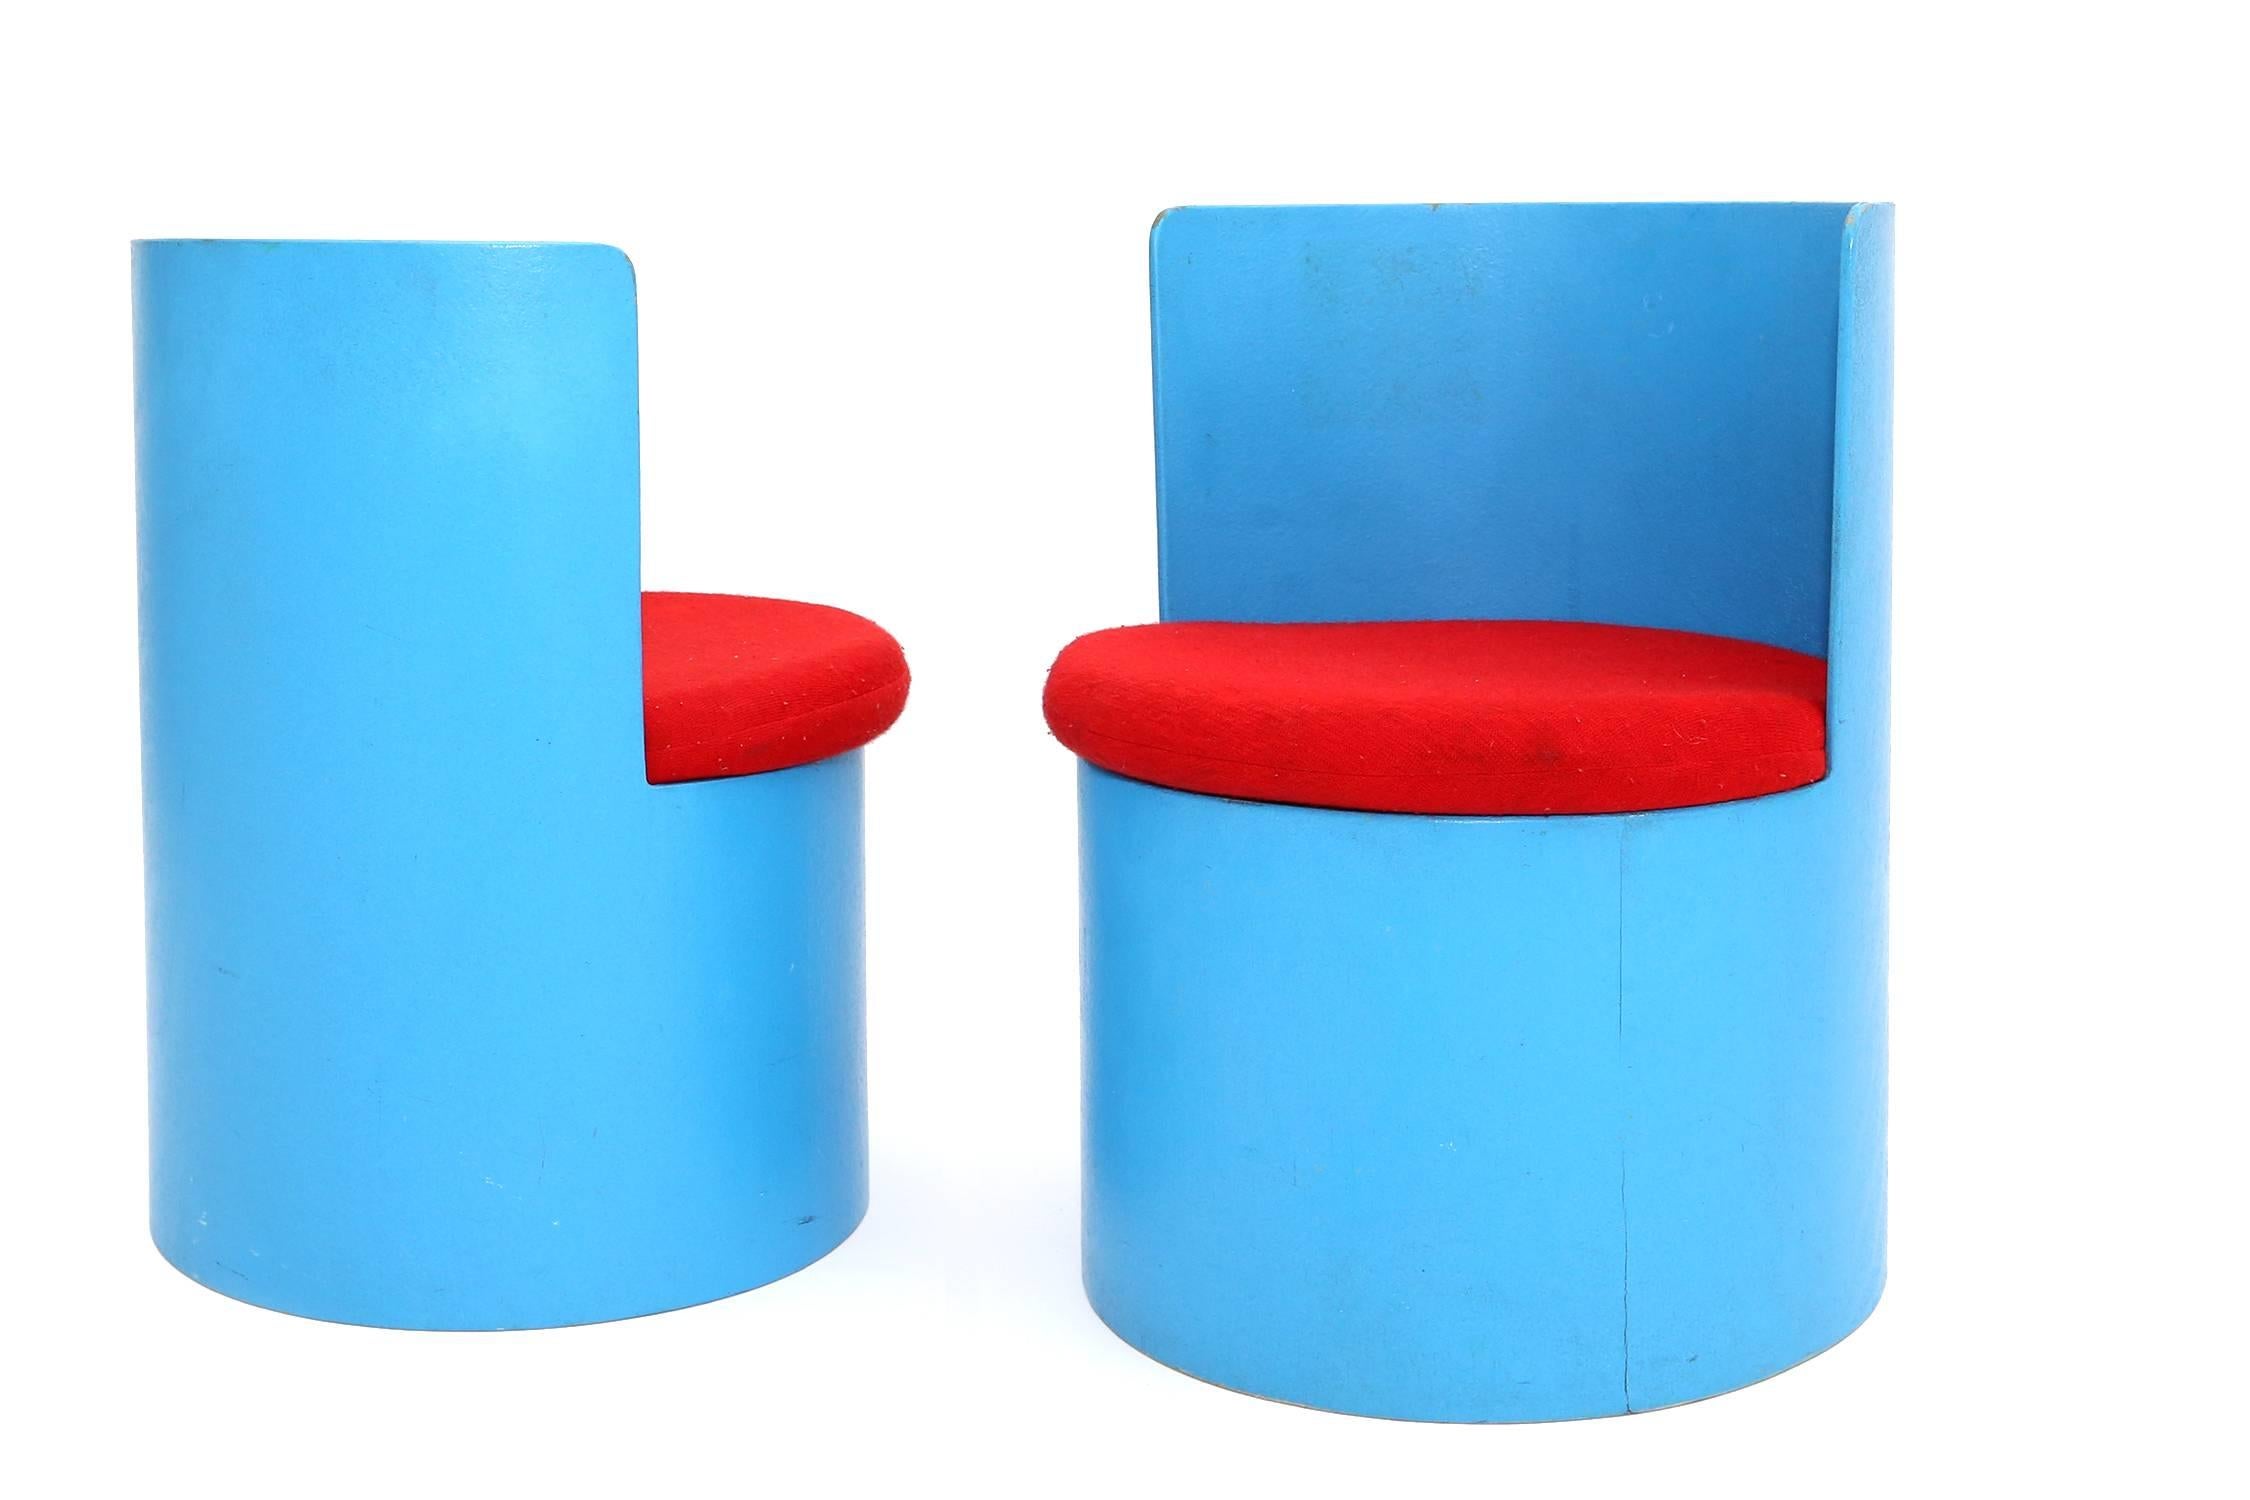 Mid-century modern Pair of  kids chairs,
circa 1950
Sky blue plywood frame.
Measures: Ø 33.5 x H 46 x SH 27 cm.